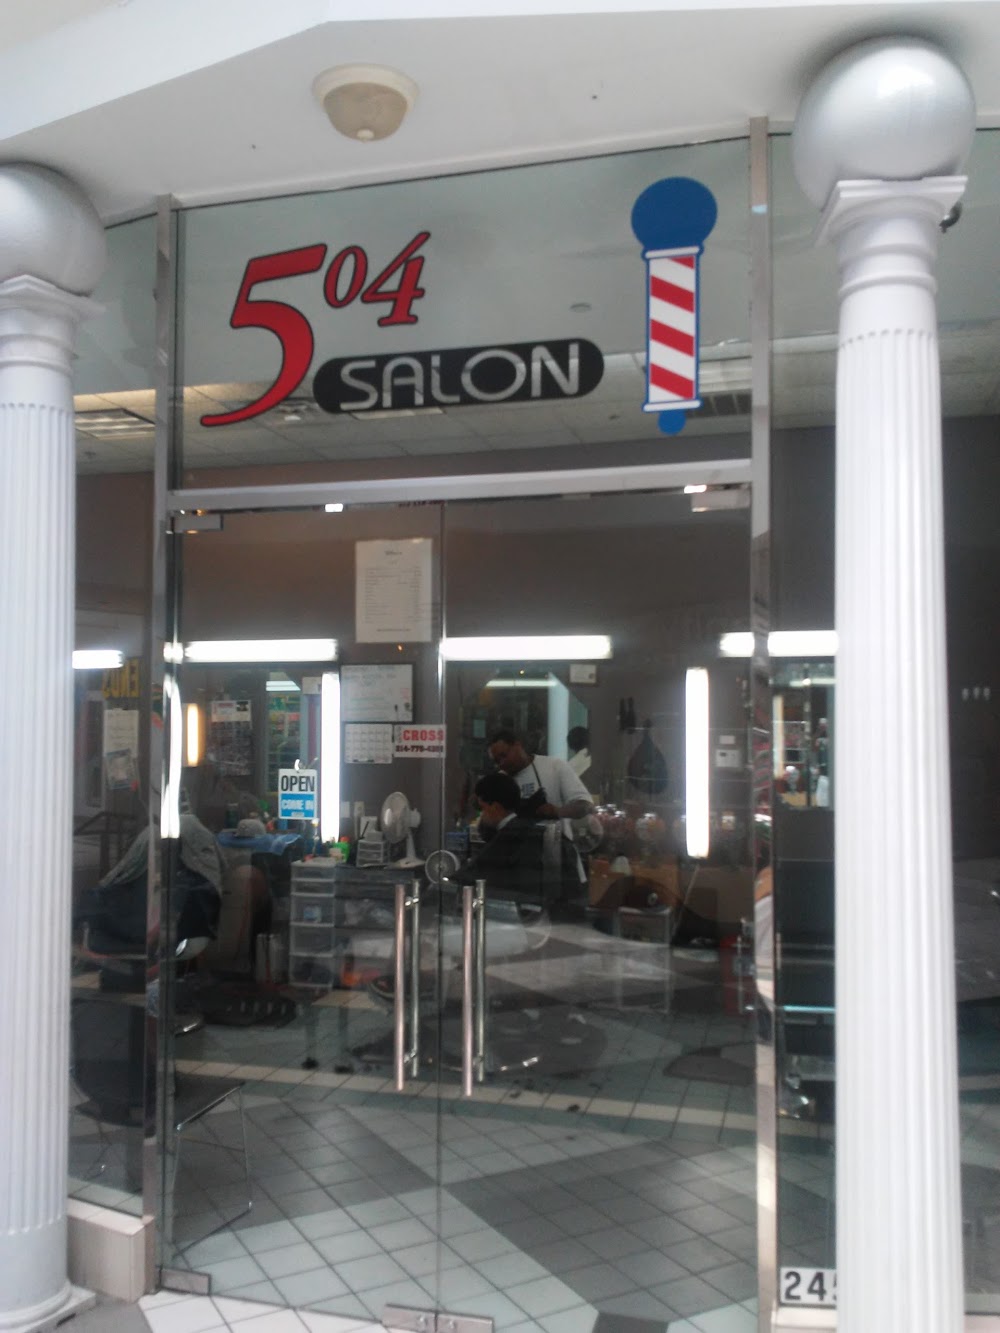 504 Salon